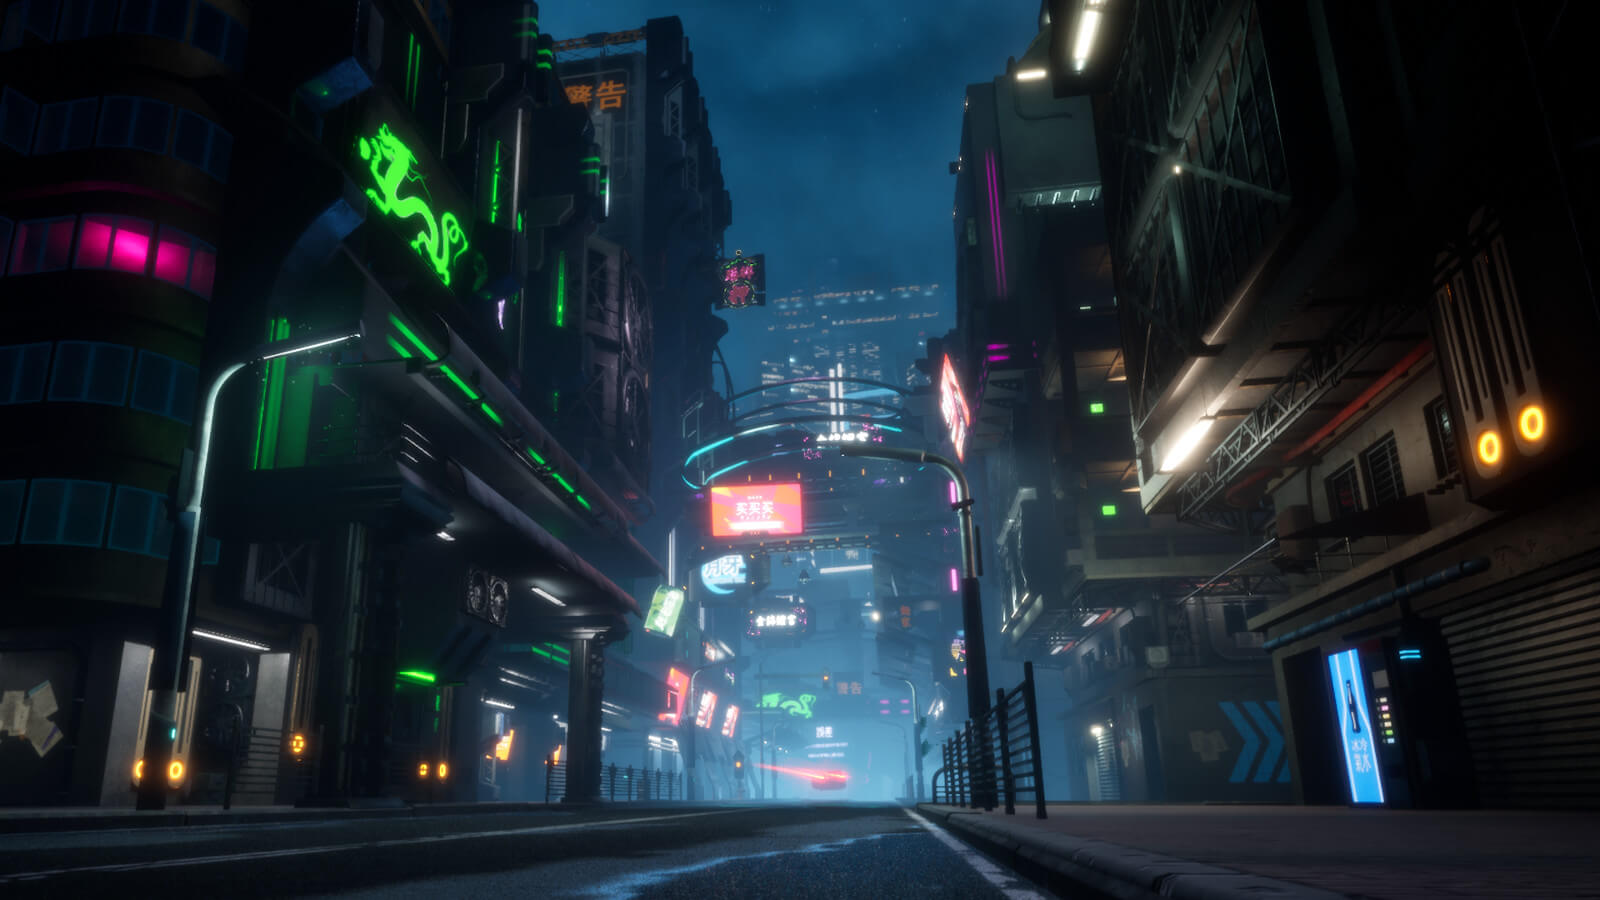 Futuristic city street at night